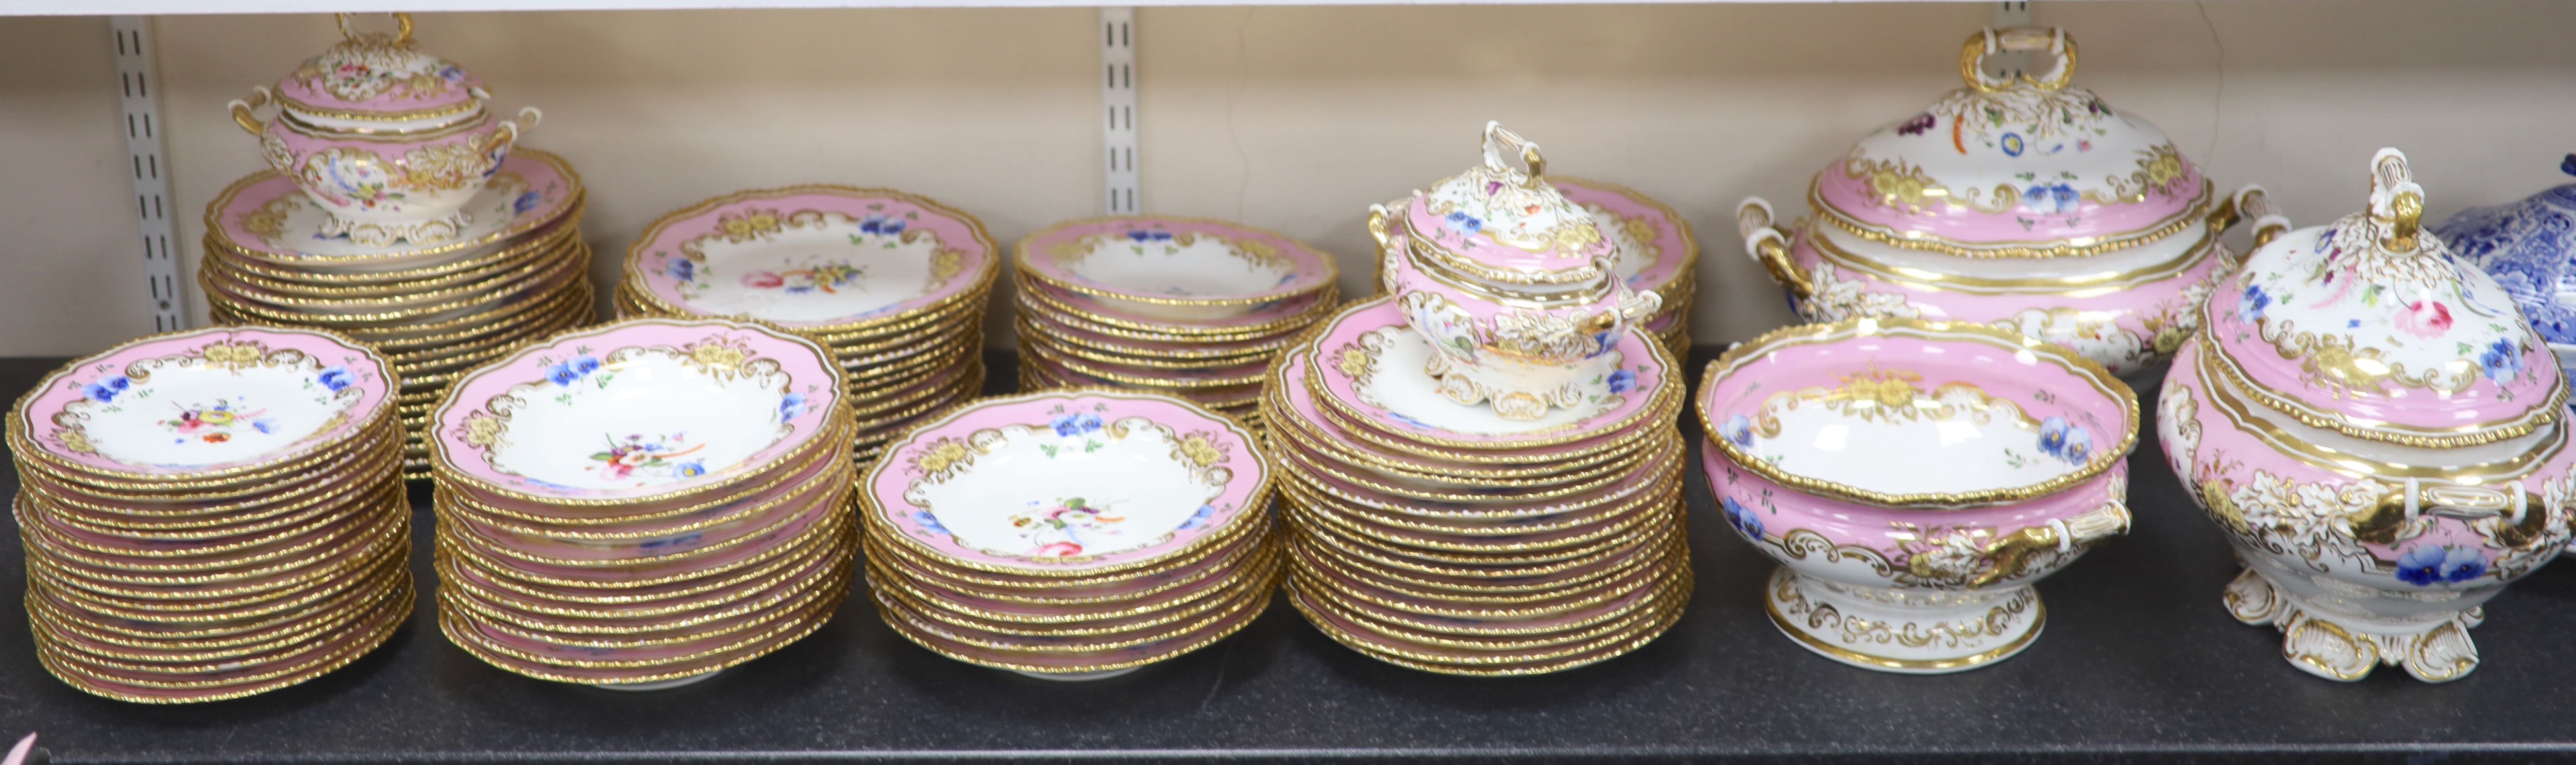 An extensive one hundred and thirteen piece English porcelain dinner and dessert service, c.1825-30,